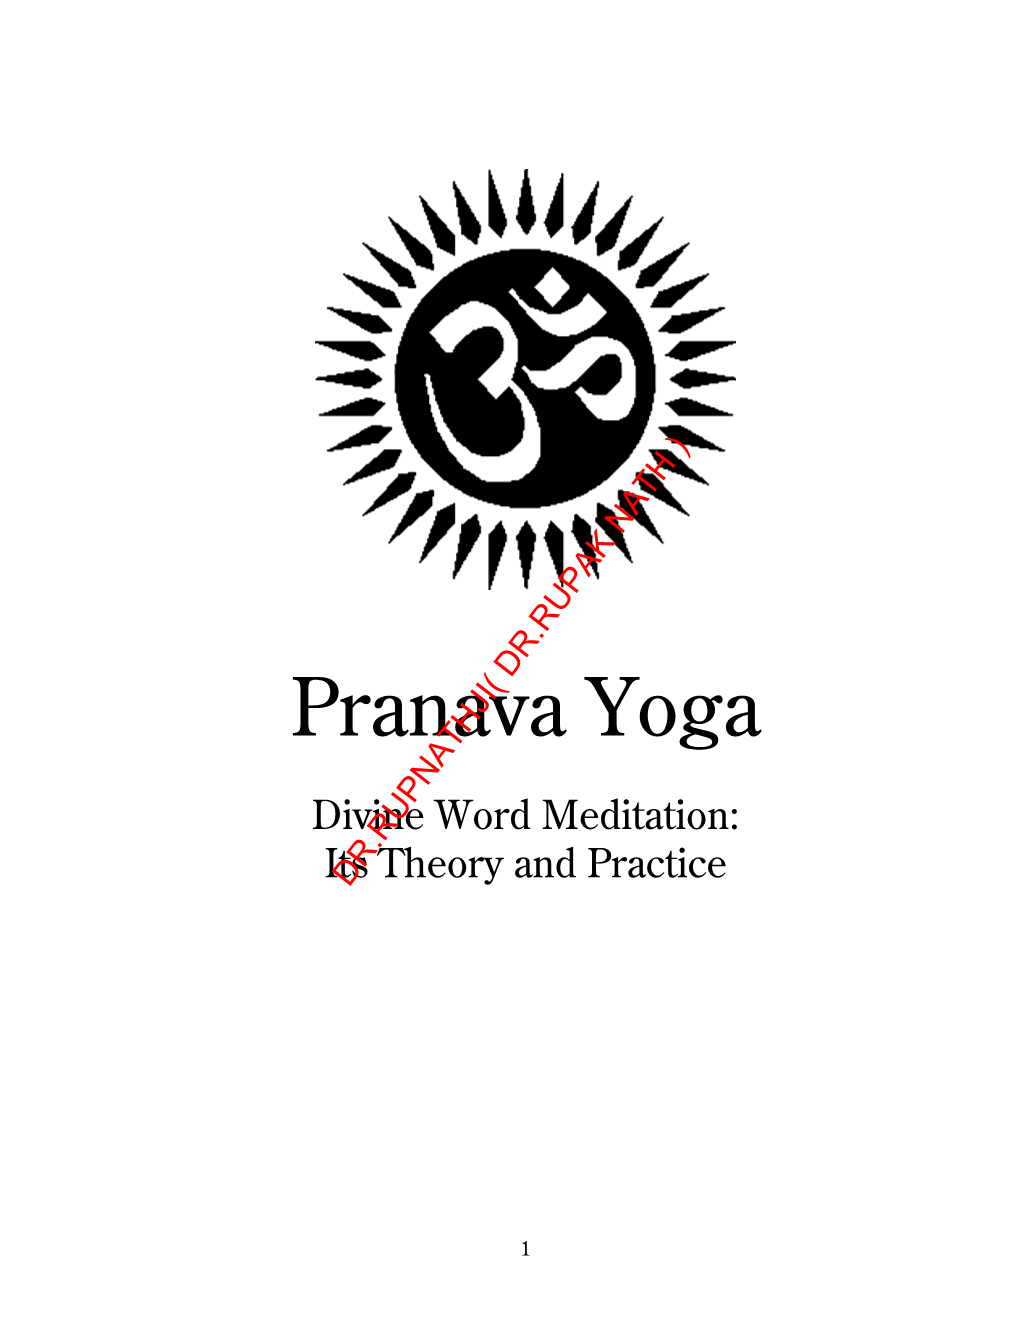 Pranava Yoga